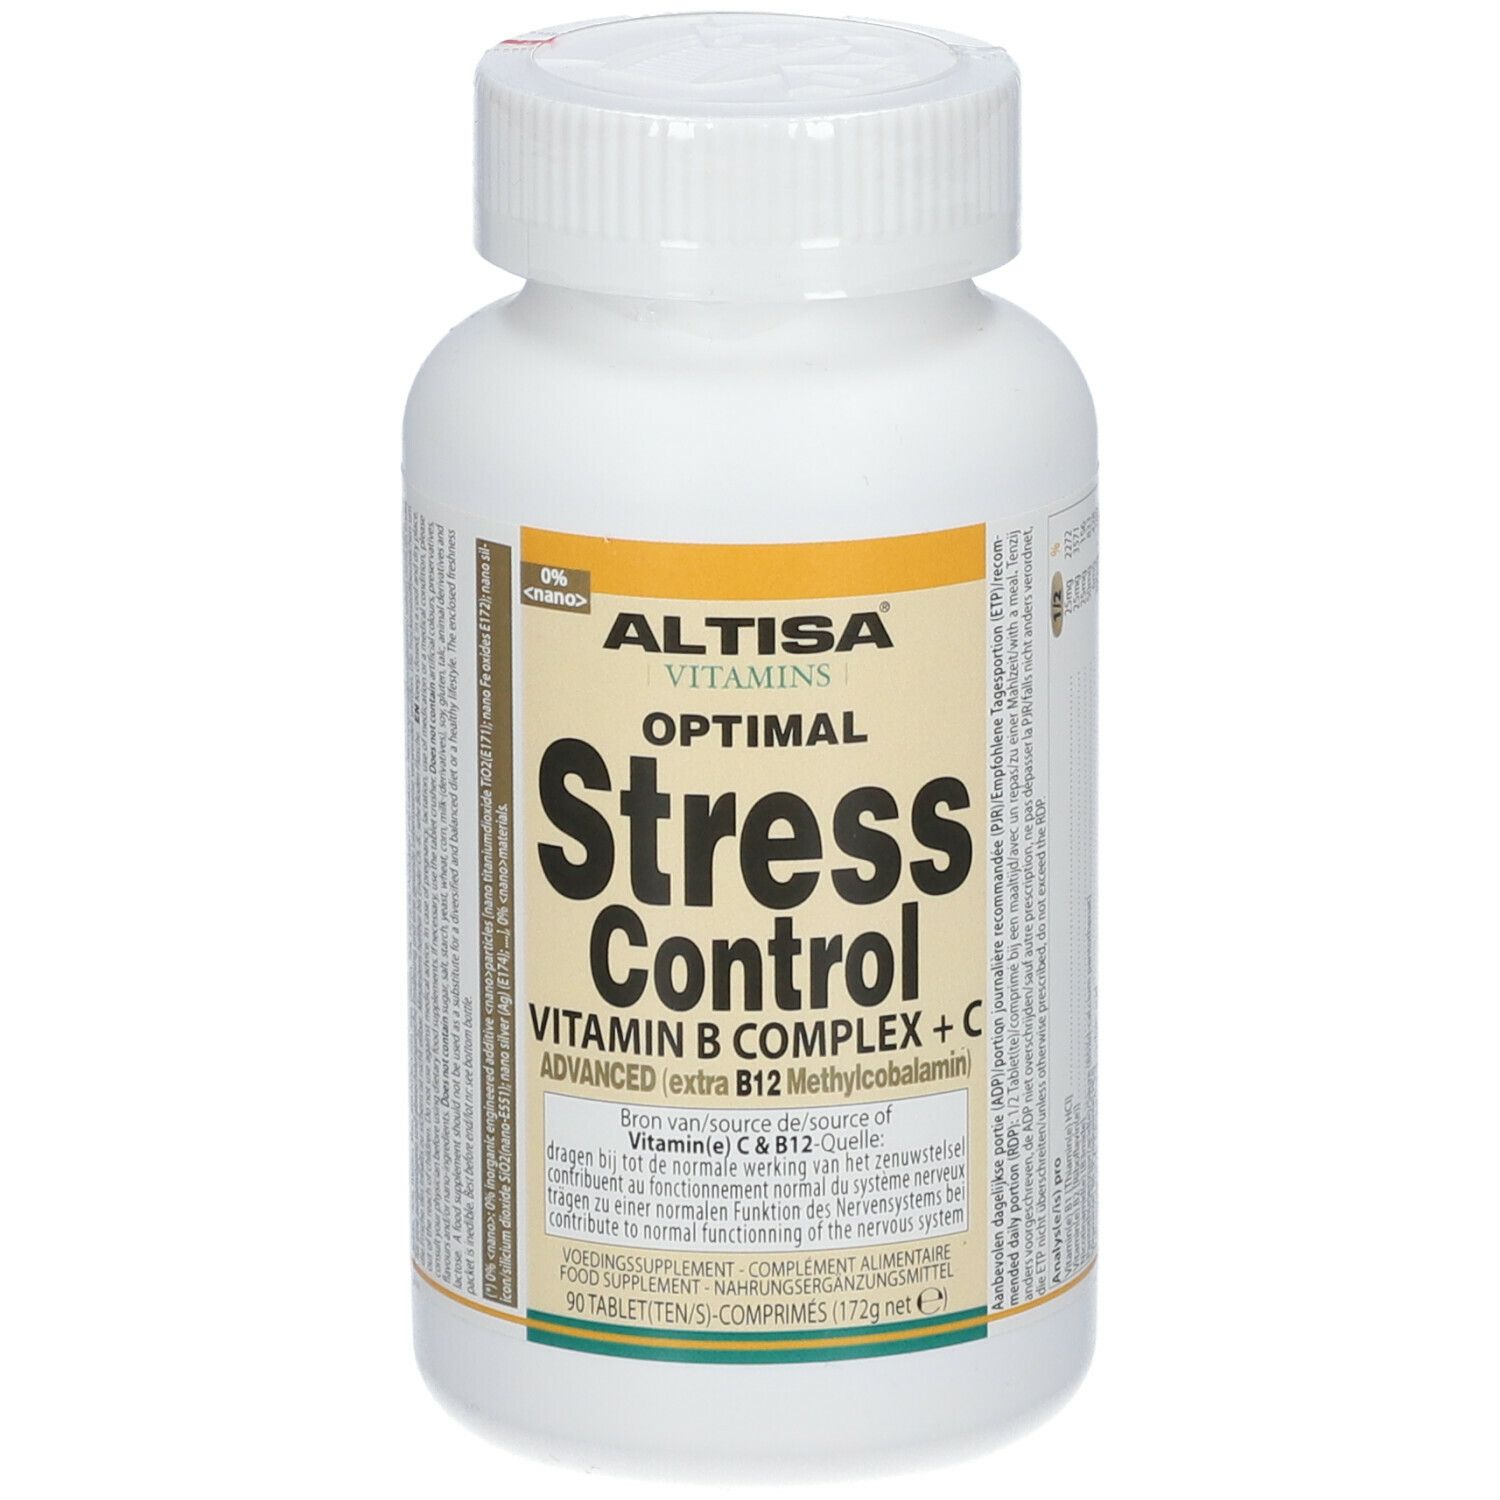 DIEXIMPORT Altisa® Optimal Stress Control B Complex + C Advanced